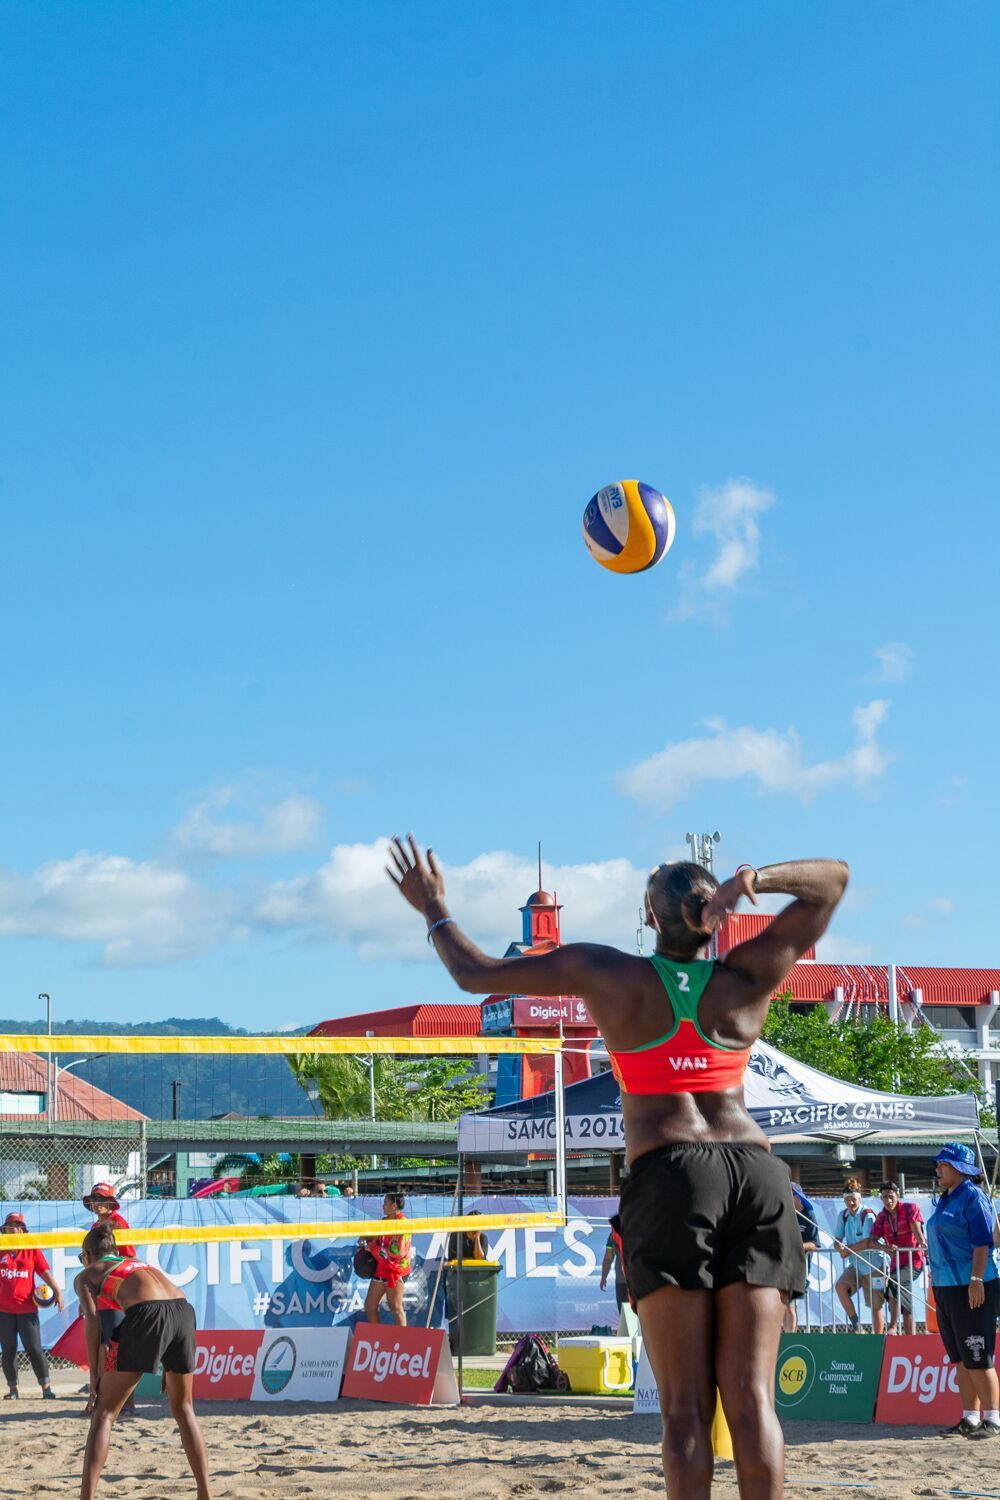 Vanuatu beat Tahiti in the women's beach volleyball final in blisteringly hot conditions ©Samoa 2019